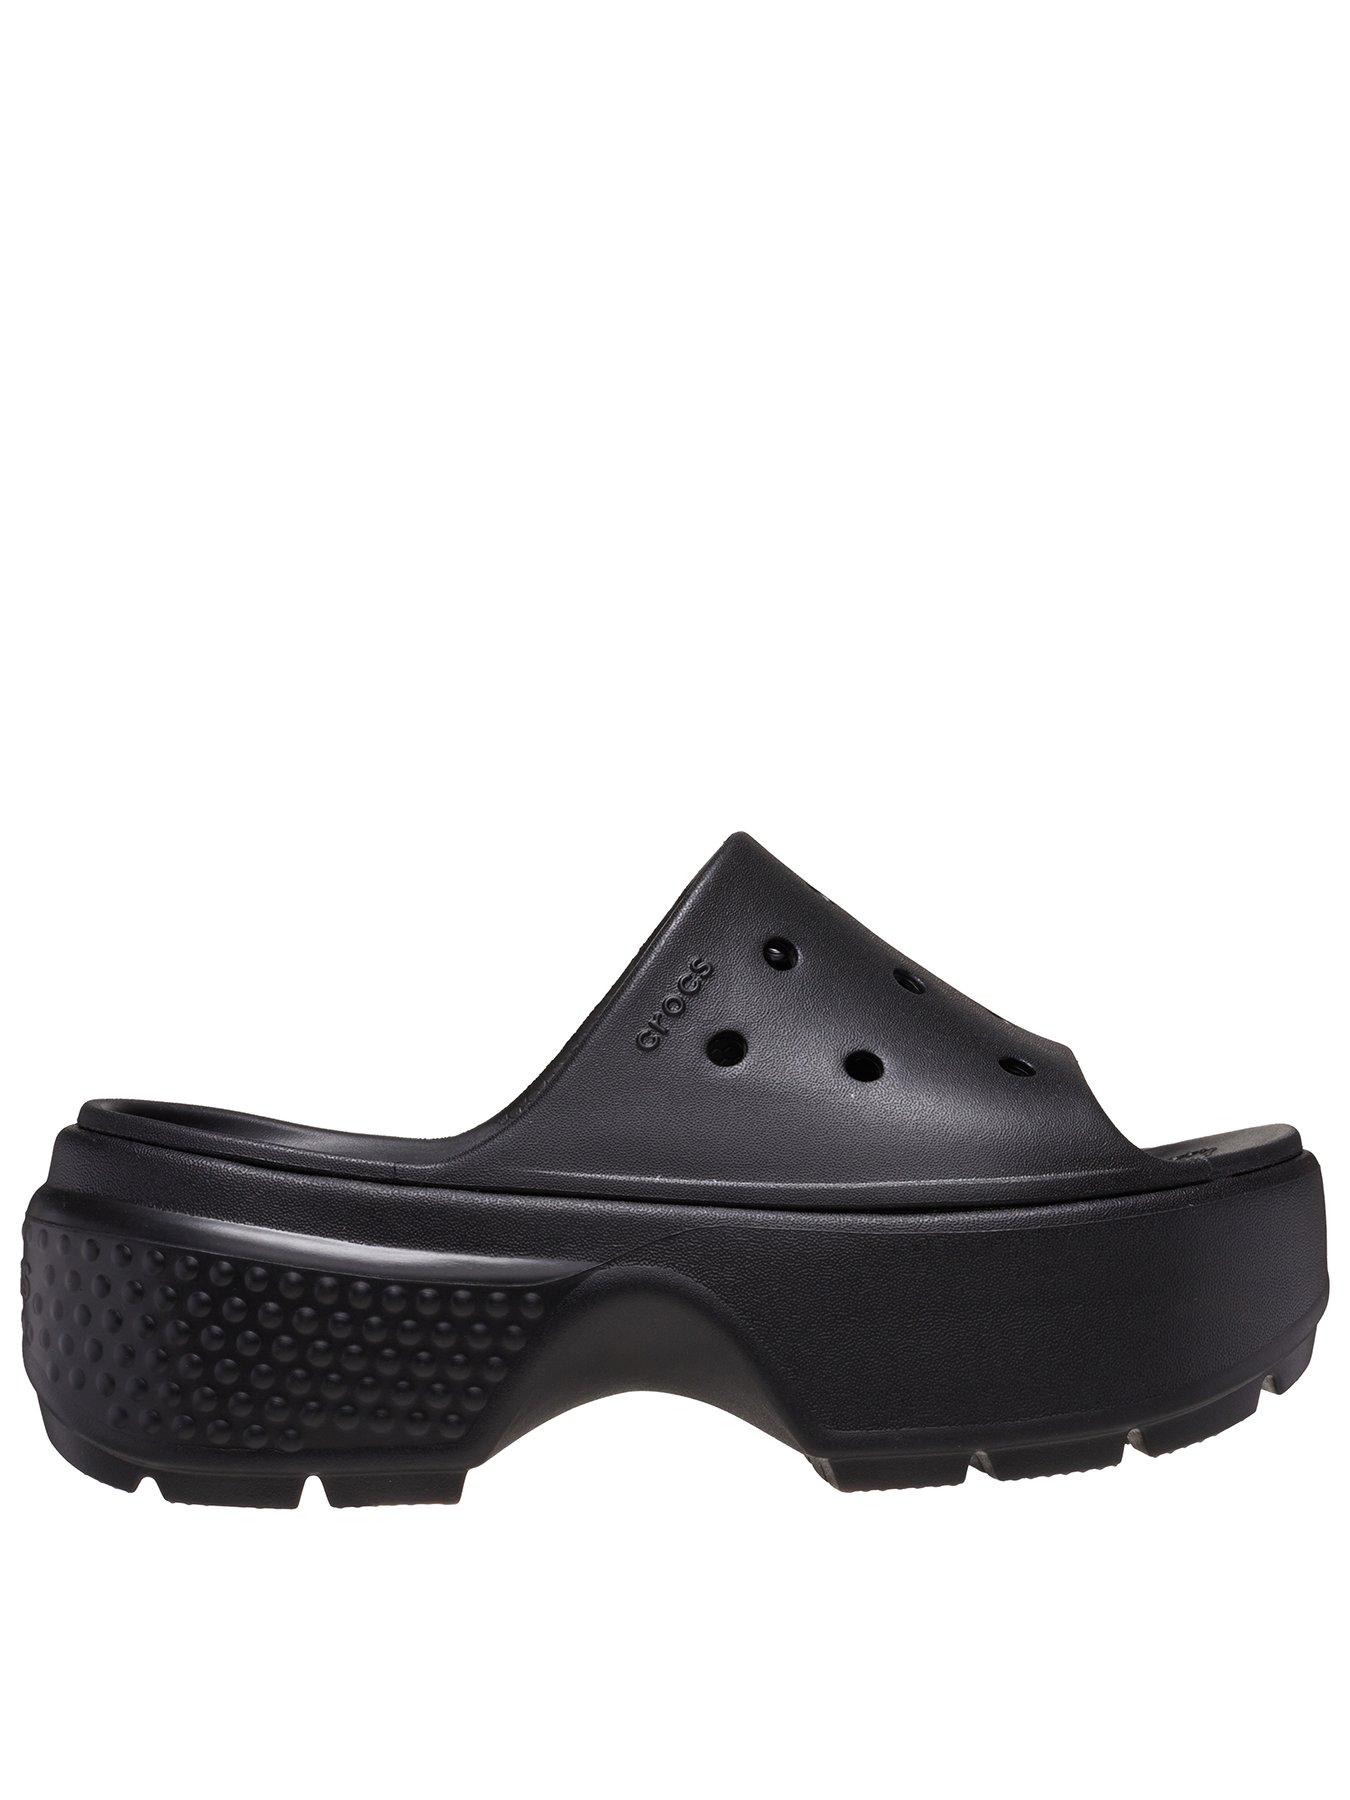 Crocs Stomp Slide - Black, Black, Size 5, Women